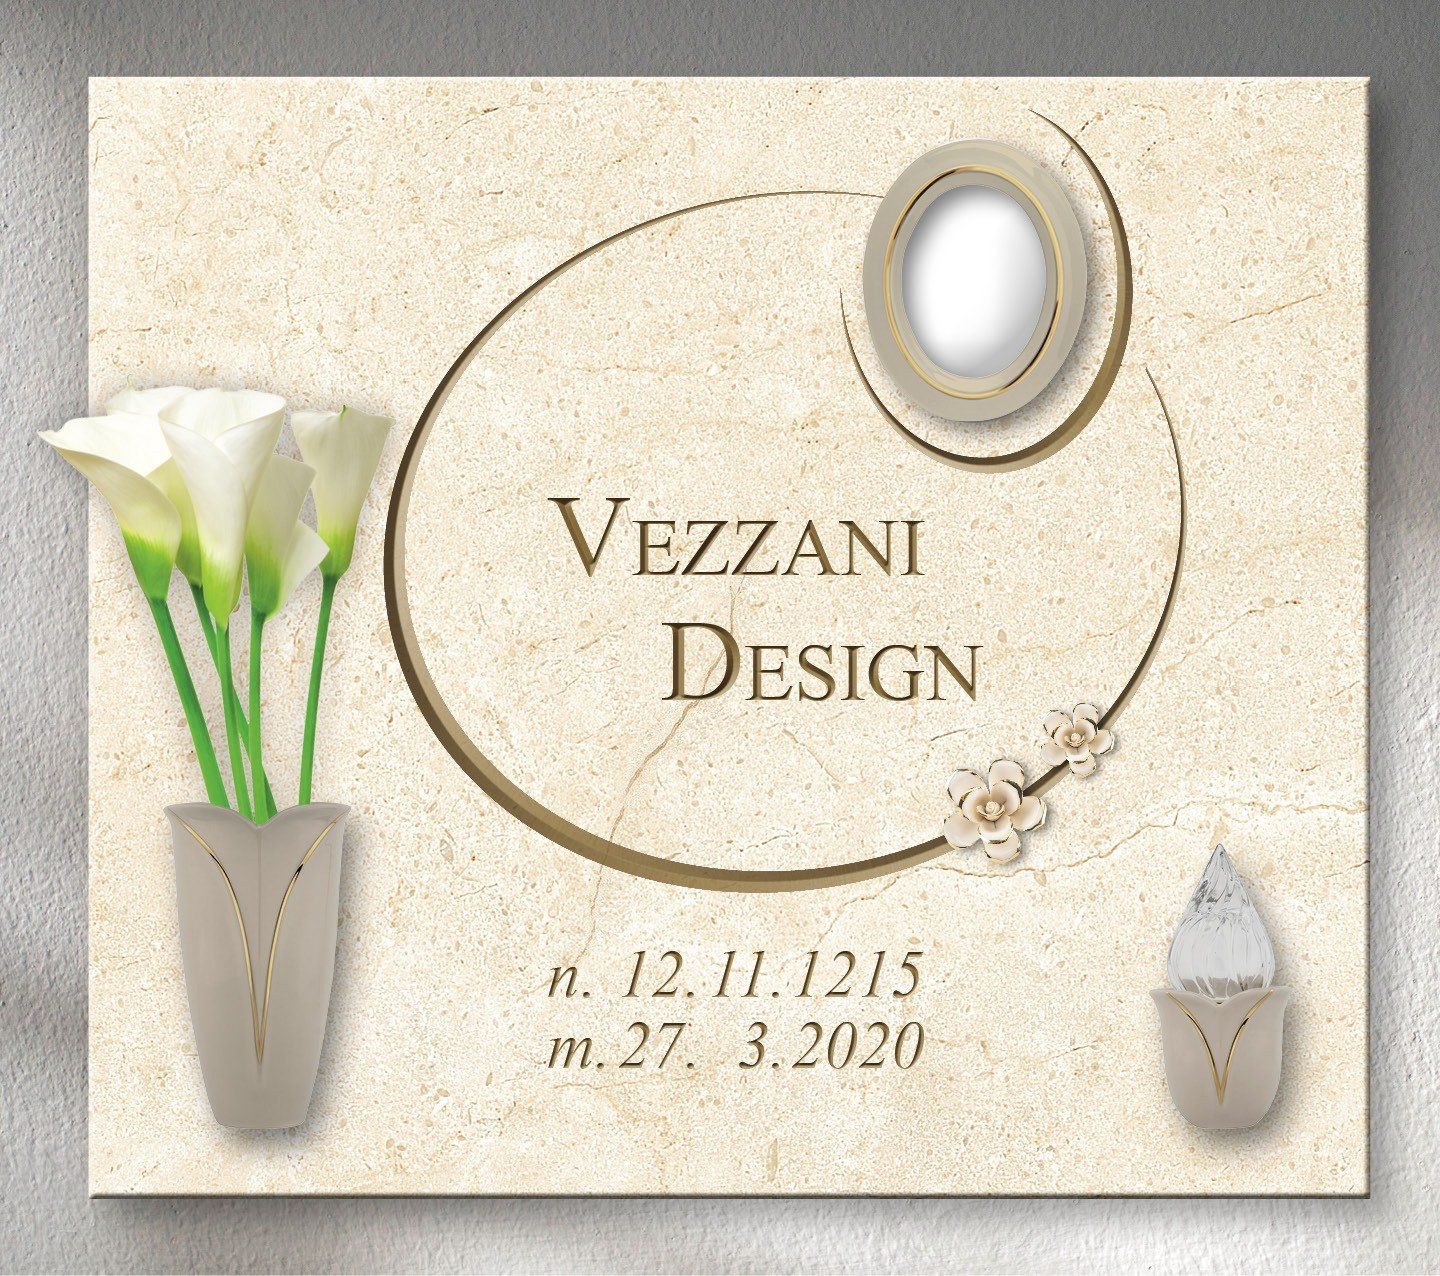 Niche with personalized engraving vezzani design 7